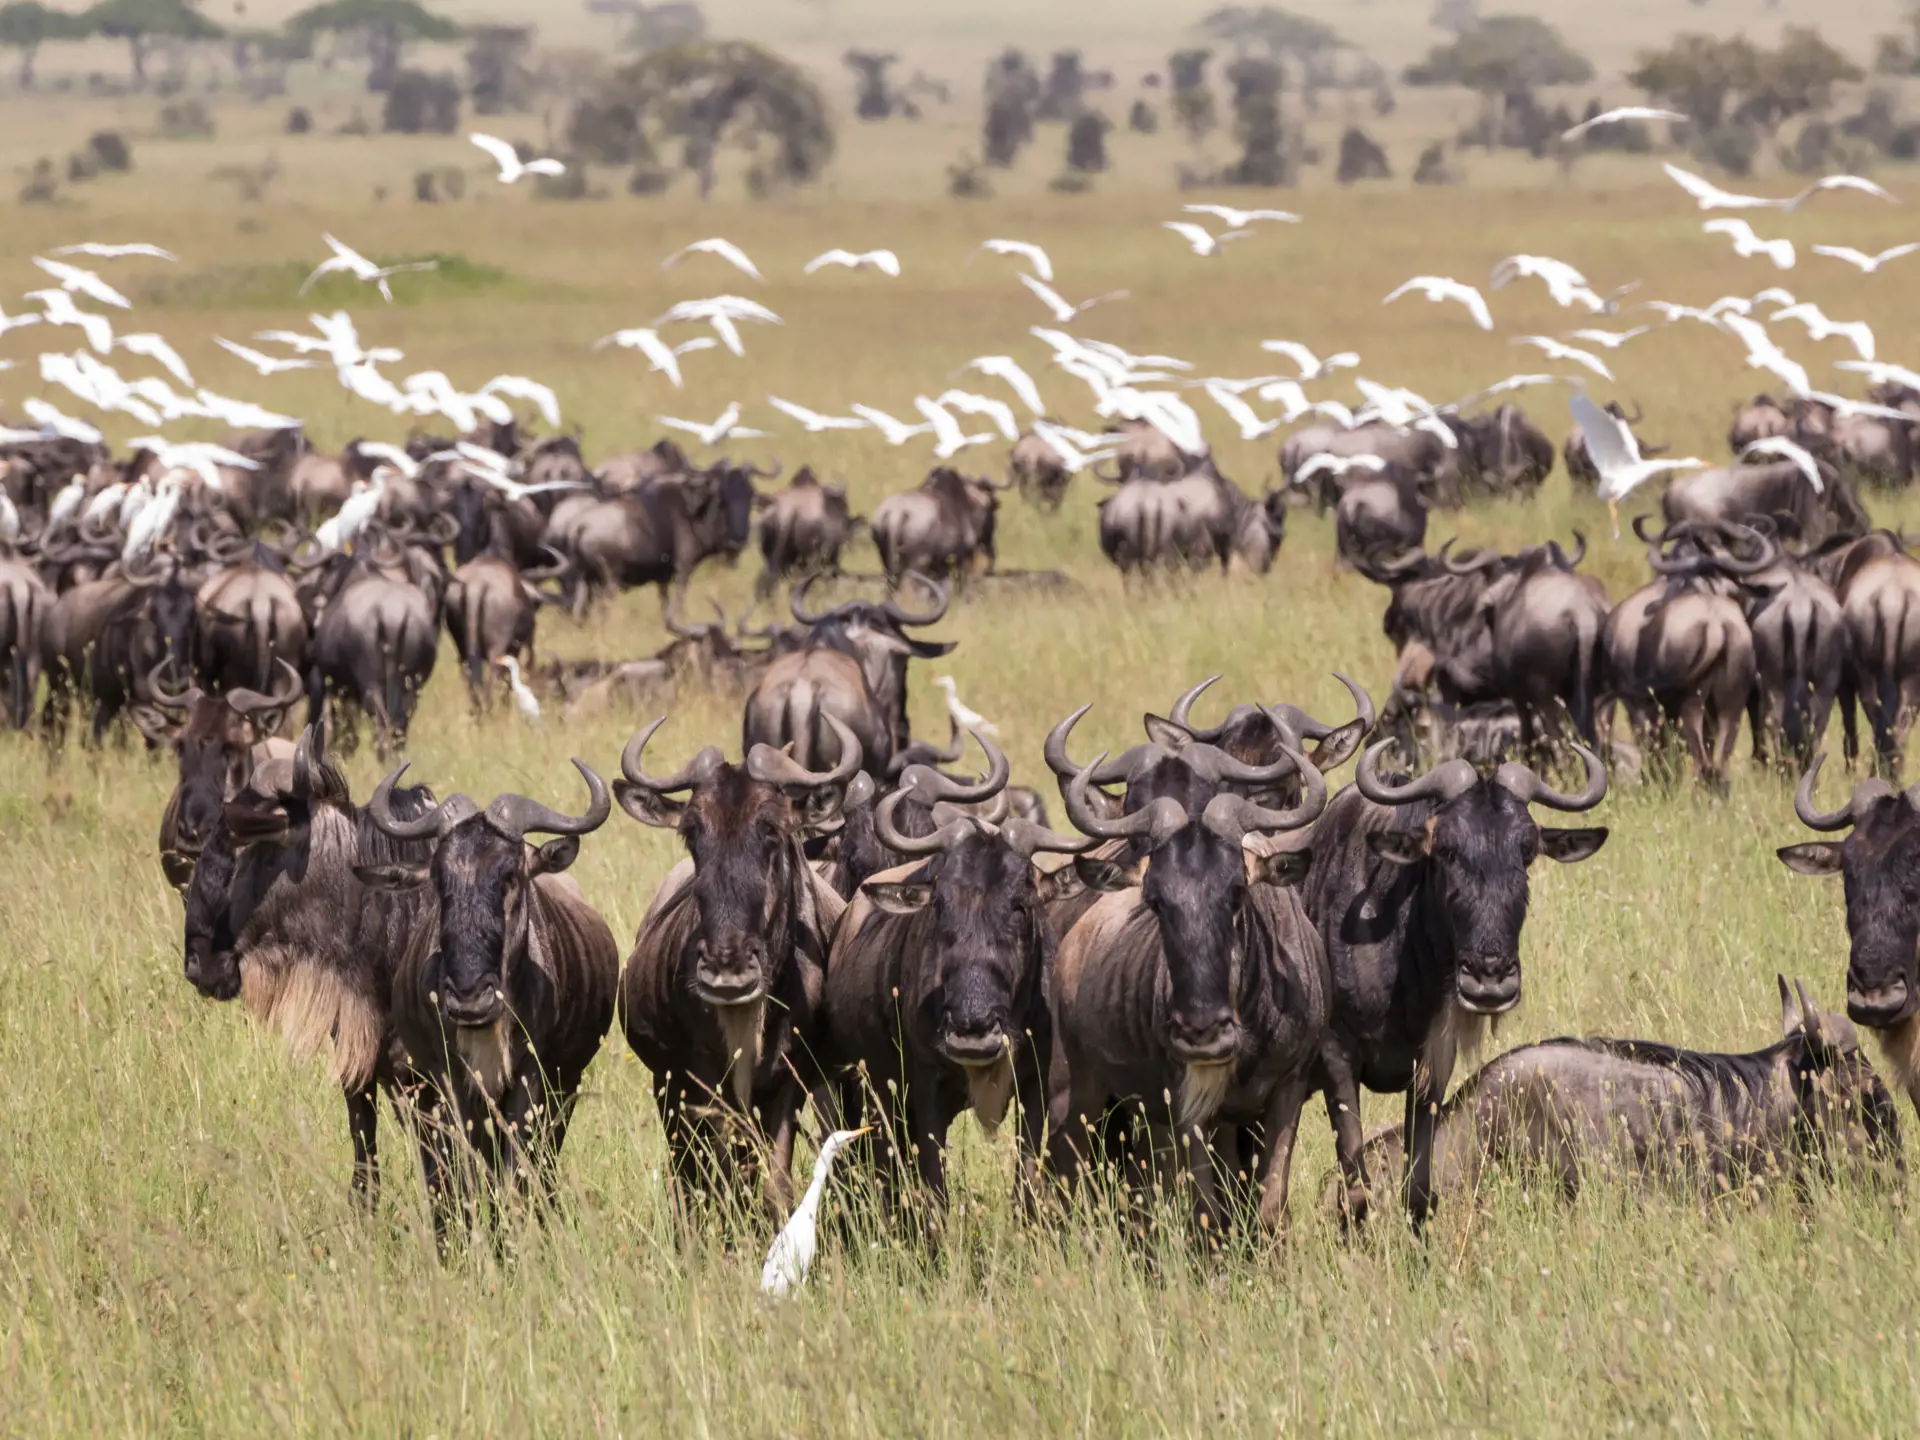 shutterstock_682728133 Connochaetes. Big herd of Wildebeests grazing in Serengeti National Park in Tanzania, East Africa..jpg